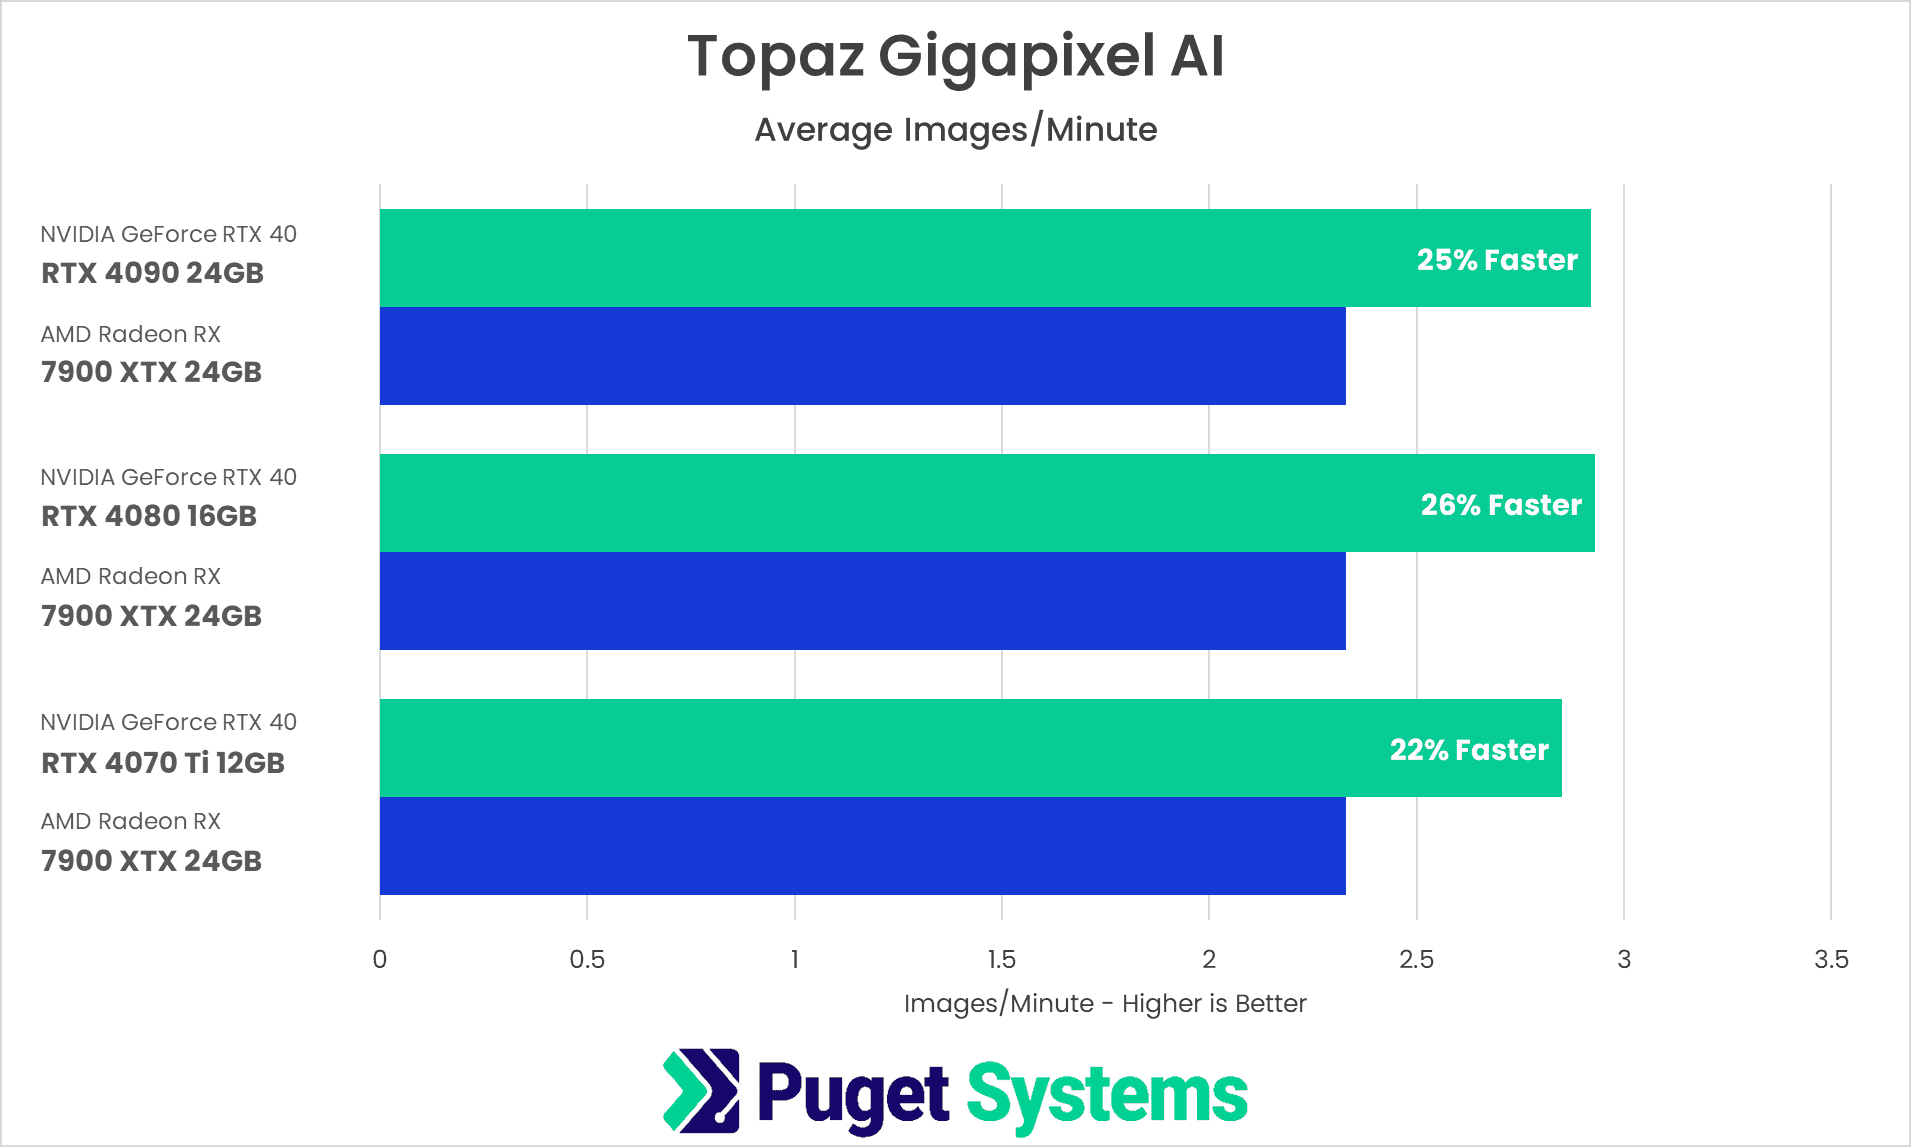 Topaz Gigapixel AI Benchmark Results NVIDIA GeForce RTX 4070 4080 4090 vs AMD Radeon 7900 XTX